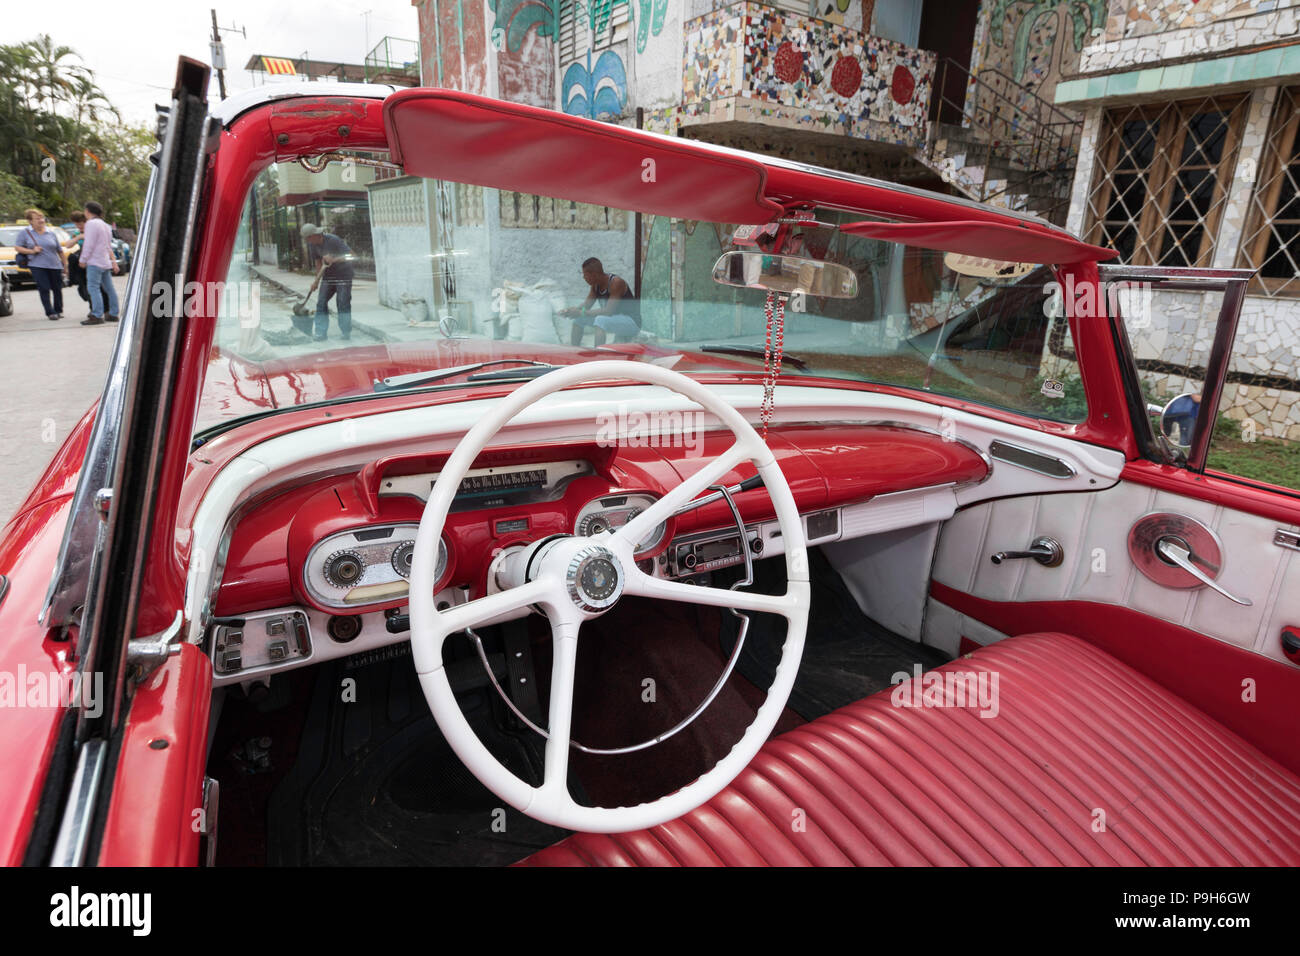 Classic American Auto als Taxi, lokal bekannt als almendrones, Havanna, Kuba verwendet. Stockfoto